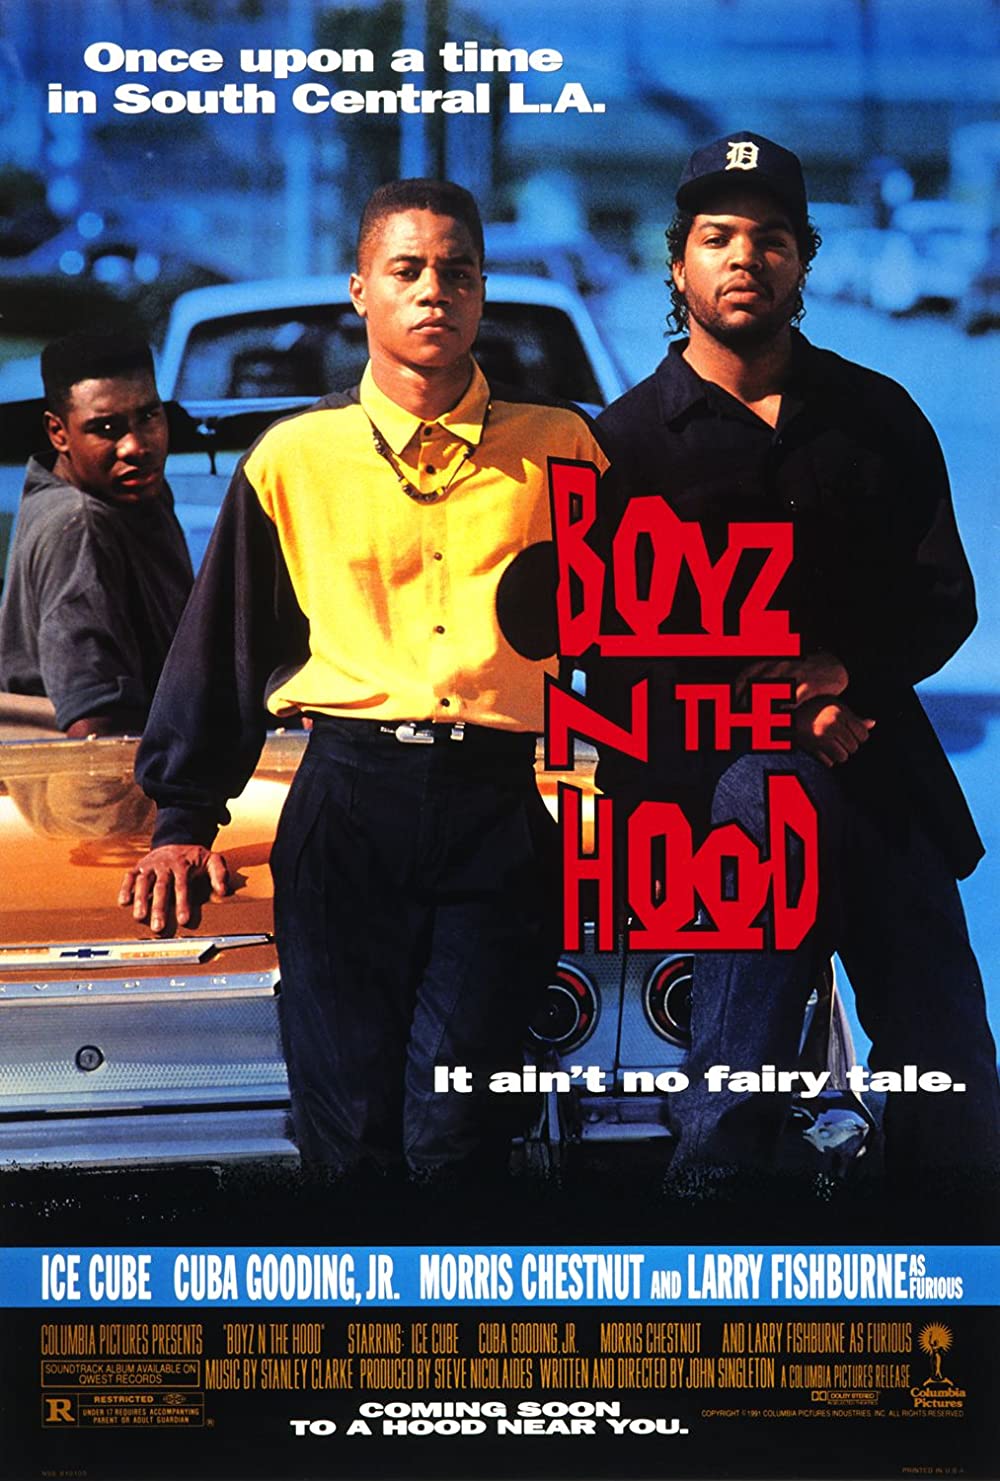 Boyz 'n in the hood